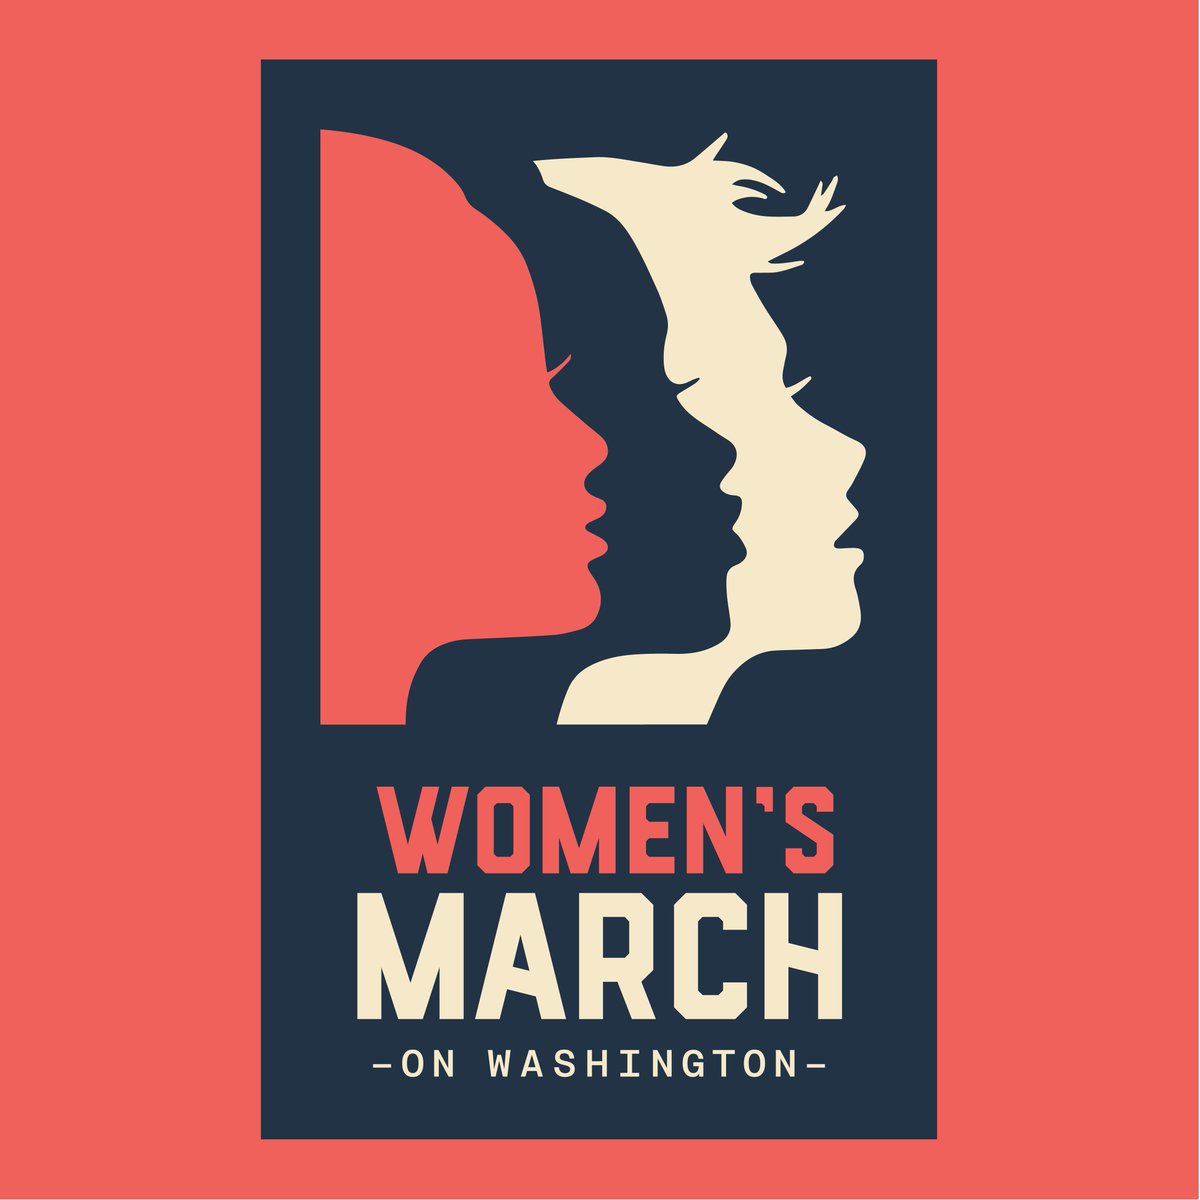 RT @womensmarch: 1.21.17 in Washington, D.C. LET'S DO THIS. #WomensMarch https://t.co/uzUjMFLWsm